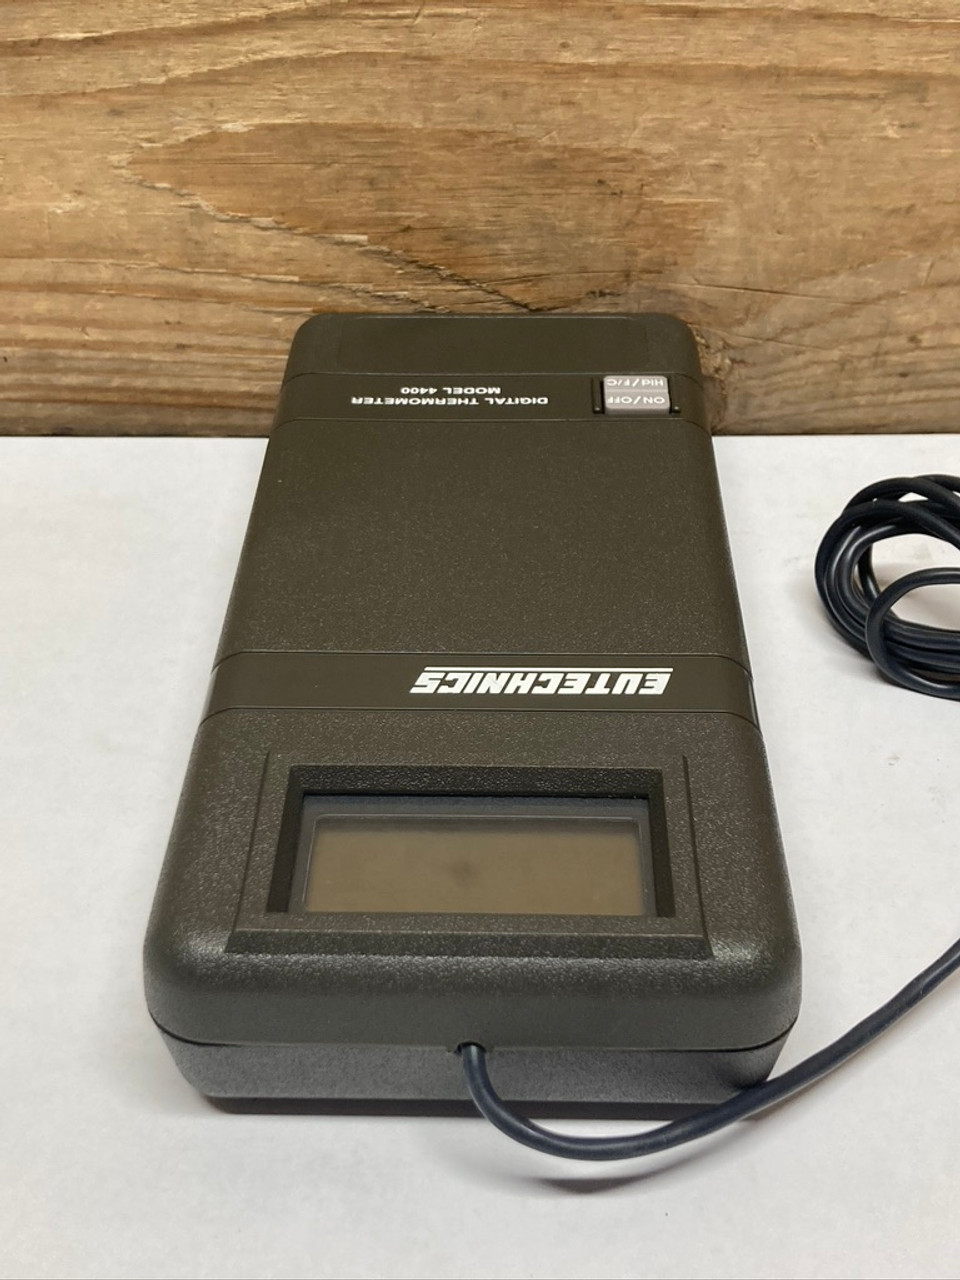 Eutechnics Model 4400 Digital Thermometer